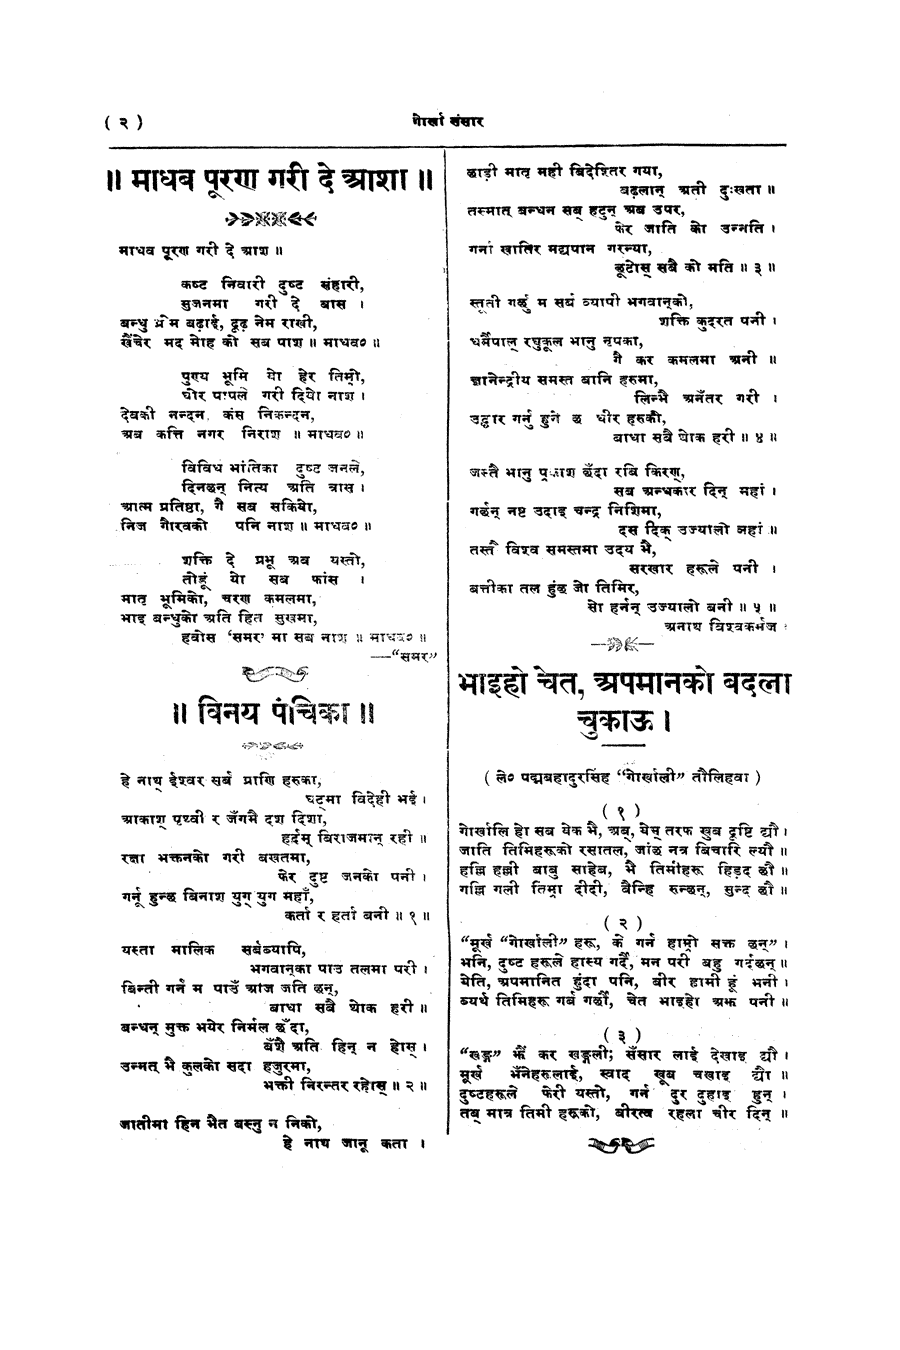 Gorkha Sansar, 18 Oct 1927, page 2